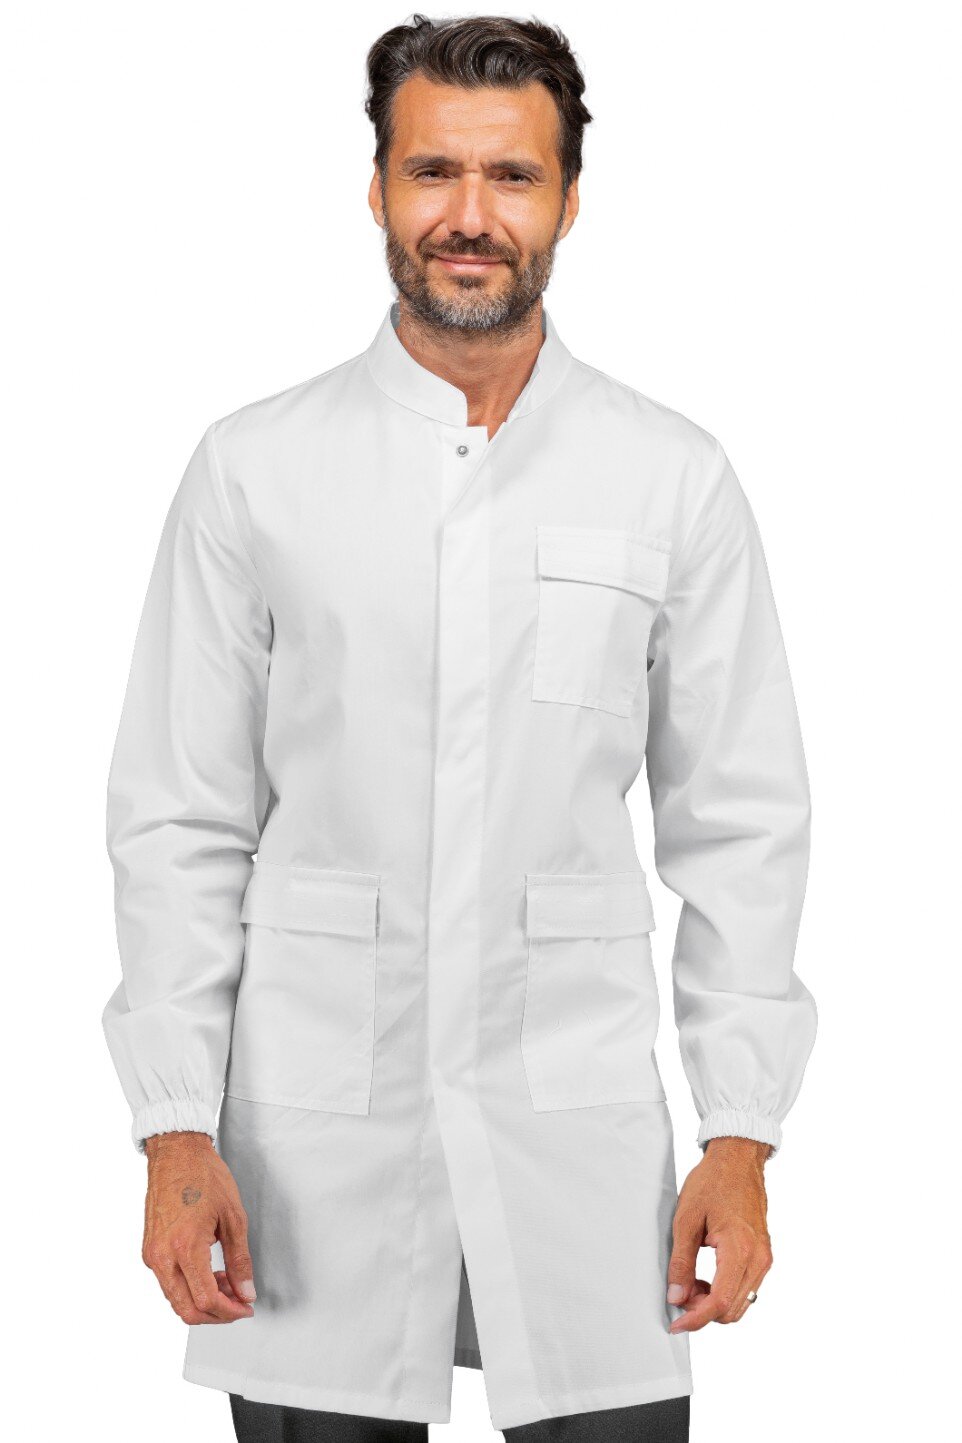 camice bianco per studenti di chimica - scheda tecnica